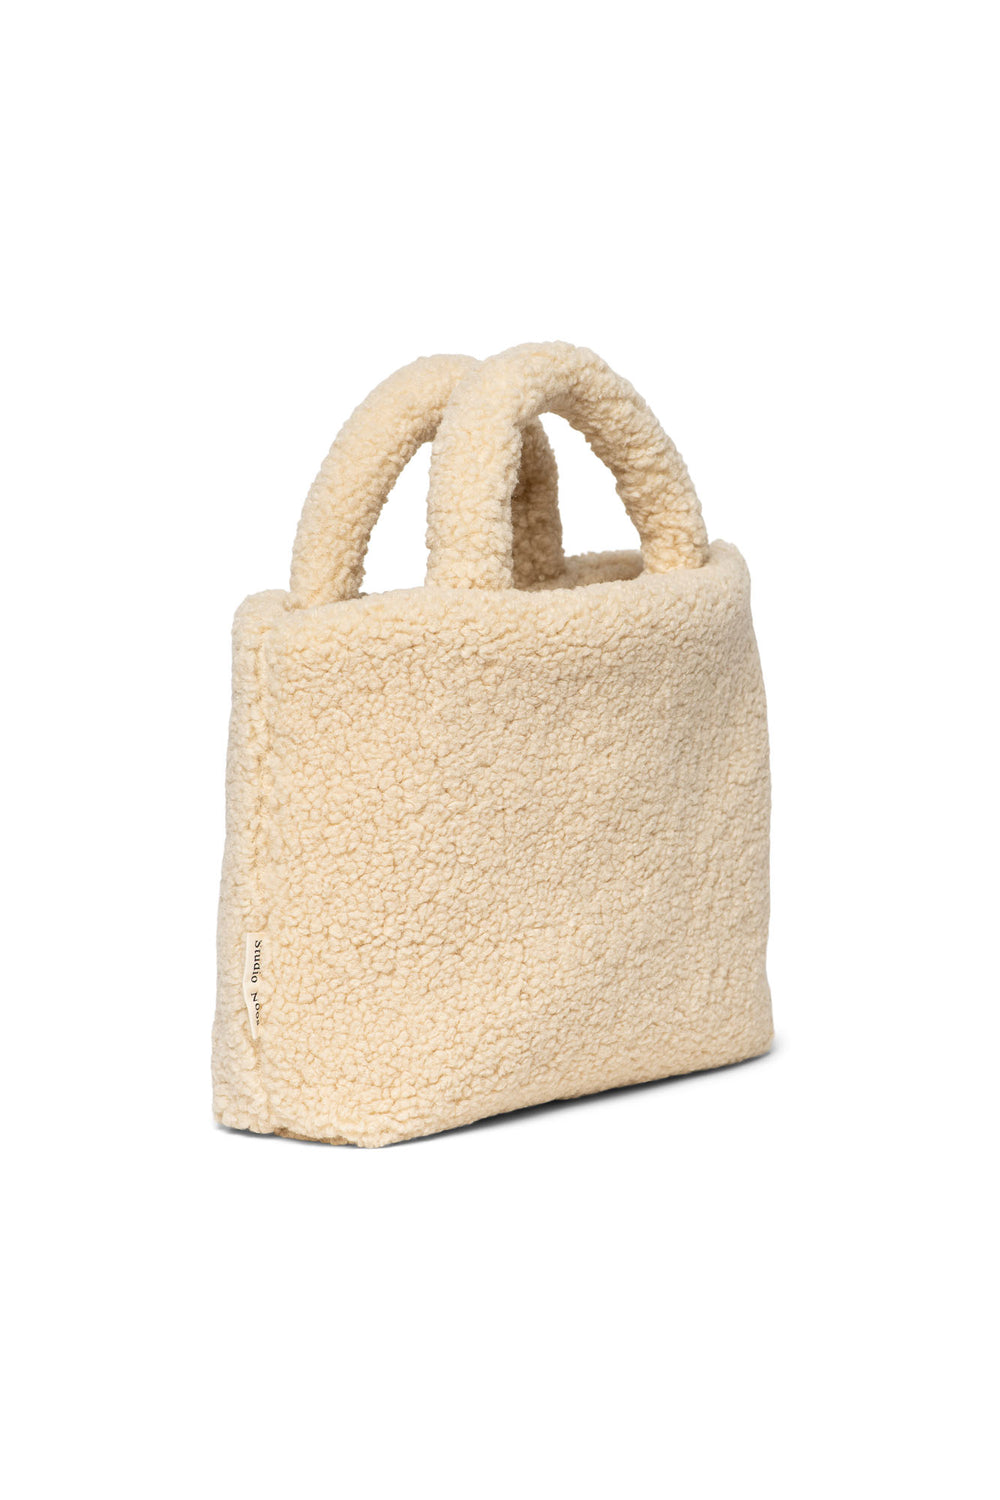 teddy handbag mini personalized